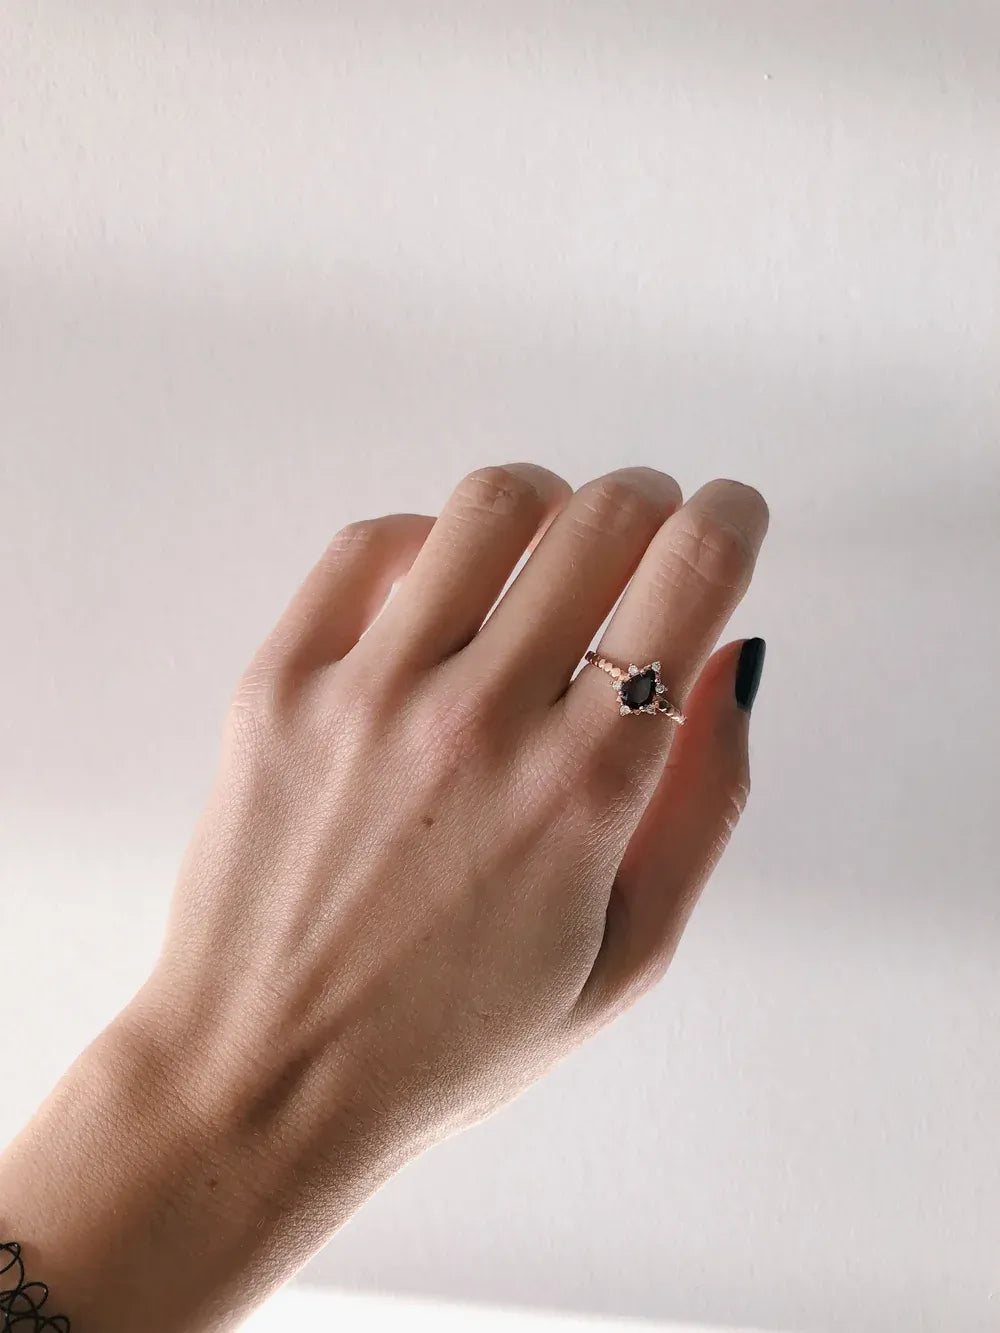 Red Garnet Jewelry Ring Worn On Woman's Hand